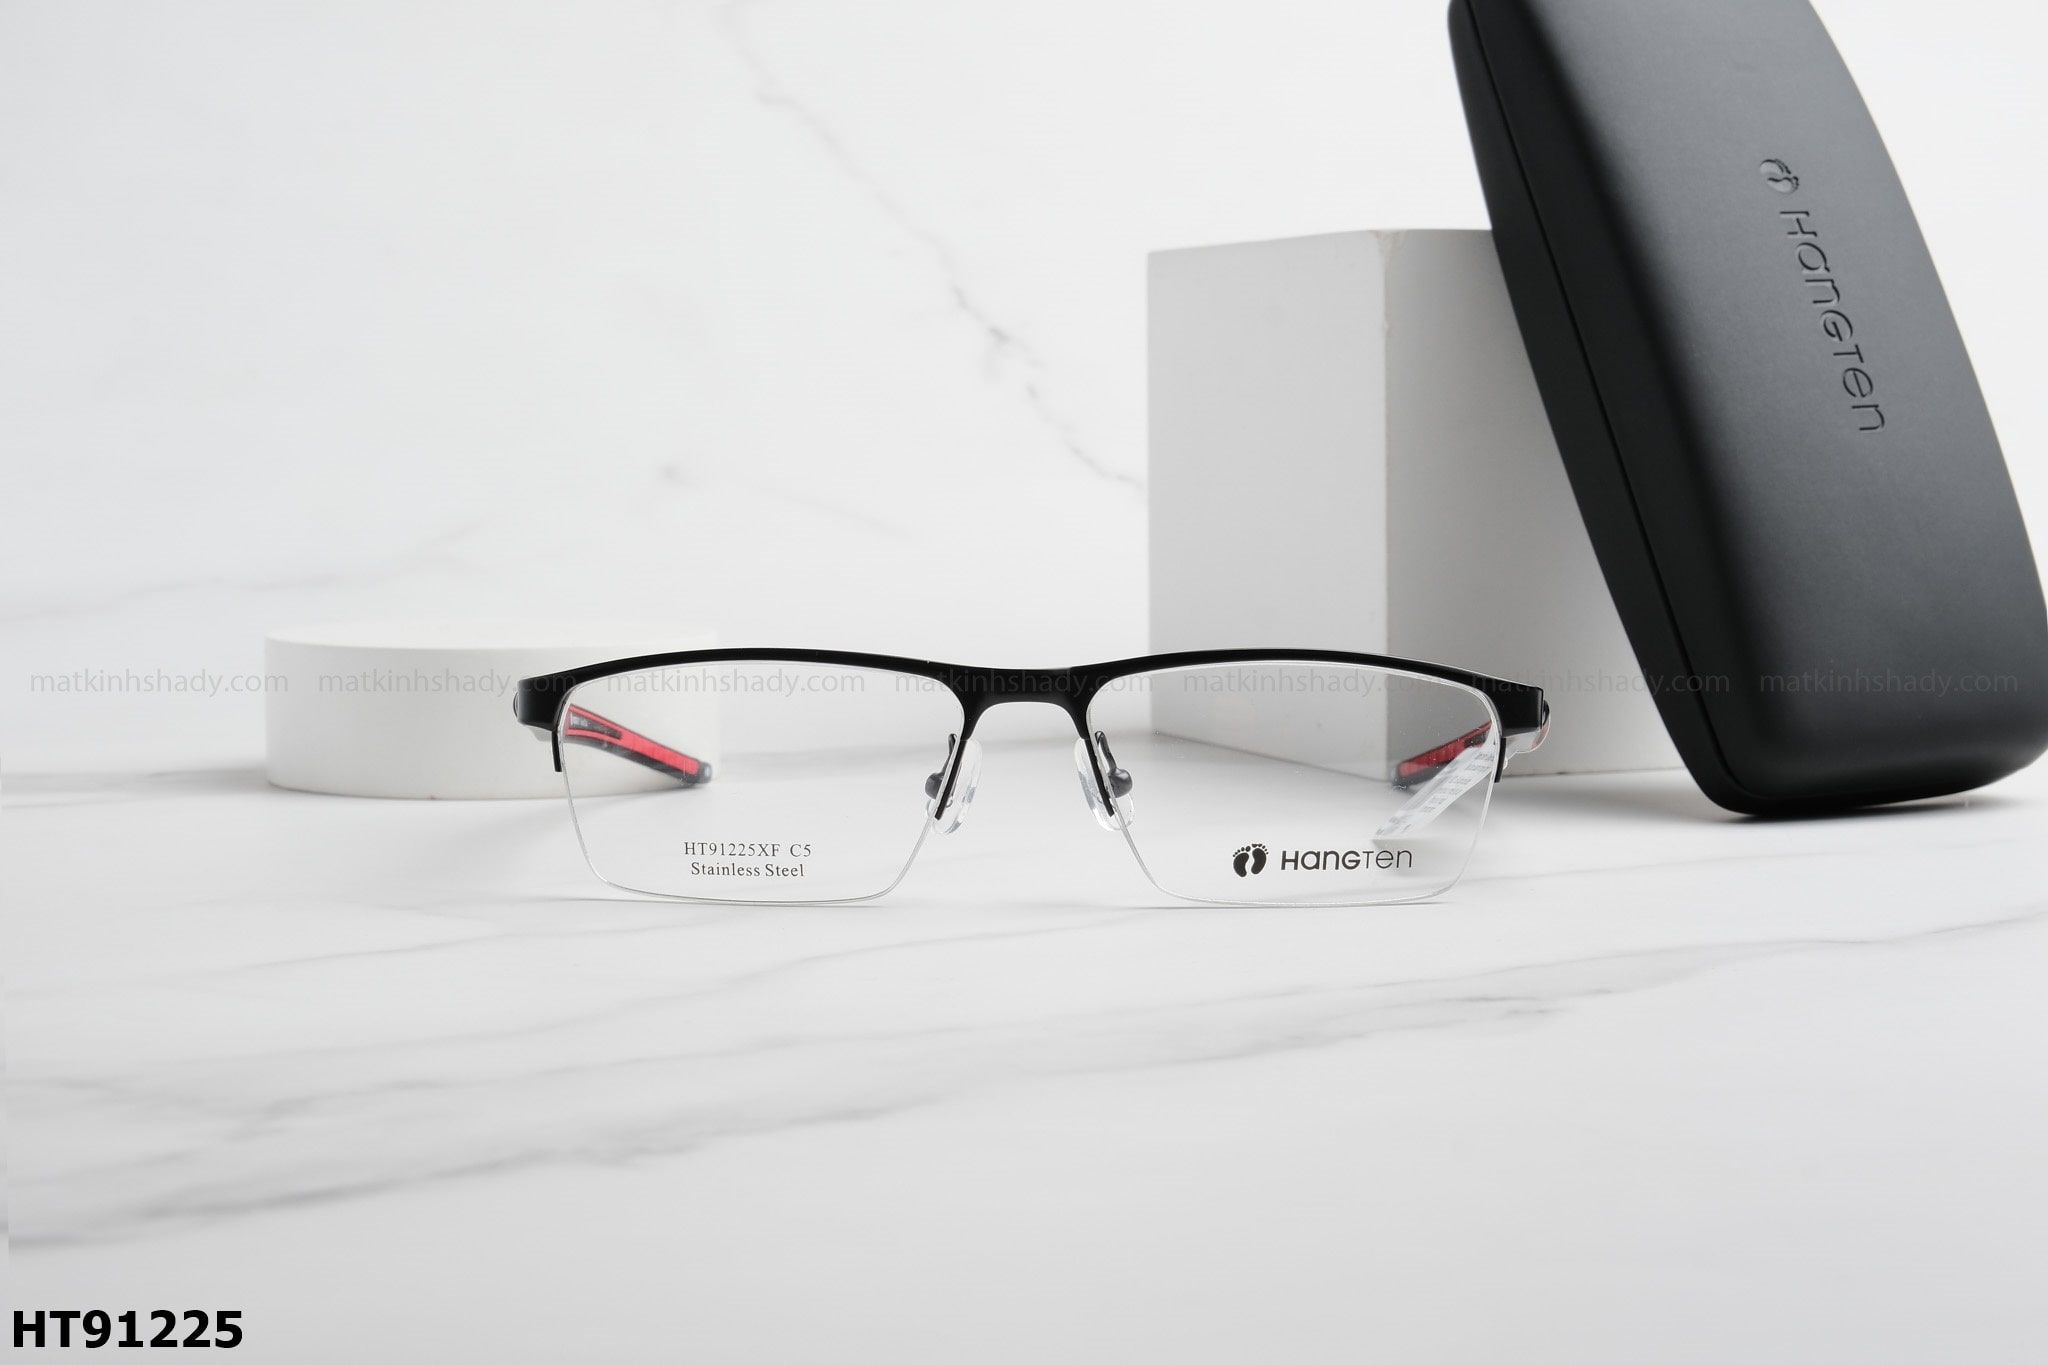  Hangten Eyewear - Glasses - HT91225 